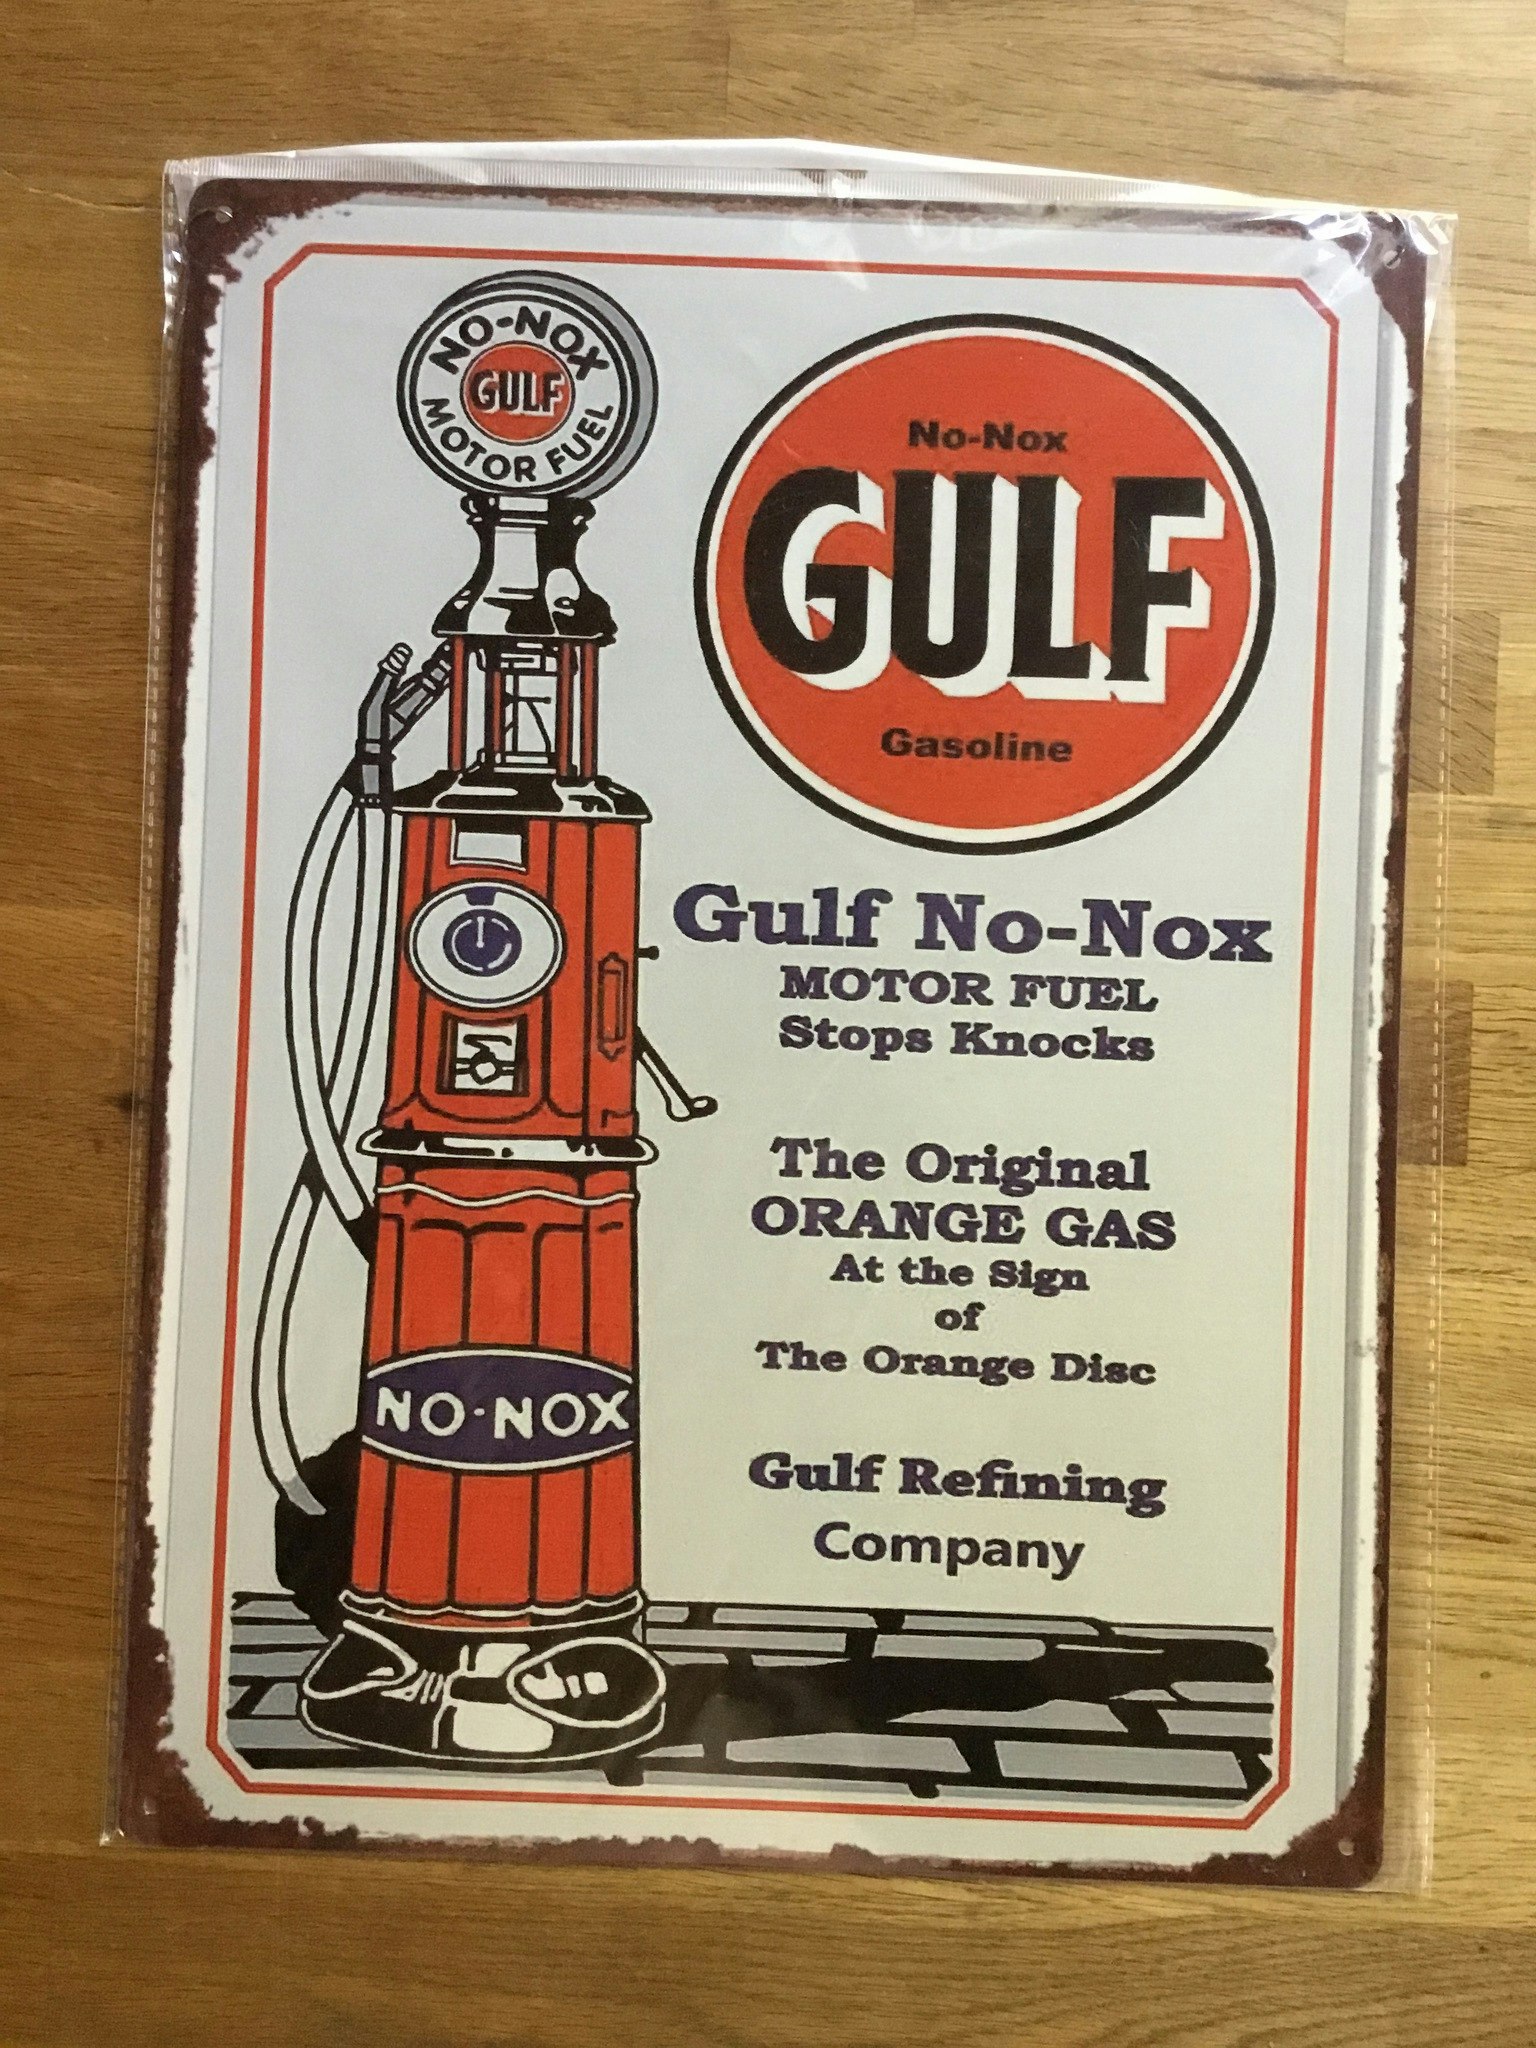 No-nox gulf gasoline